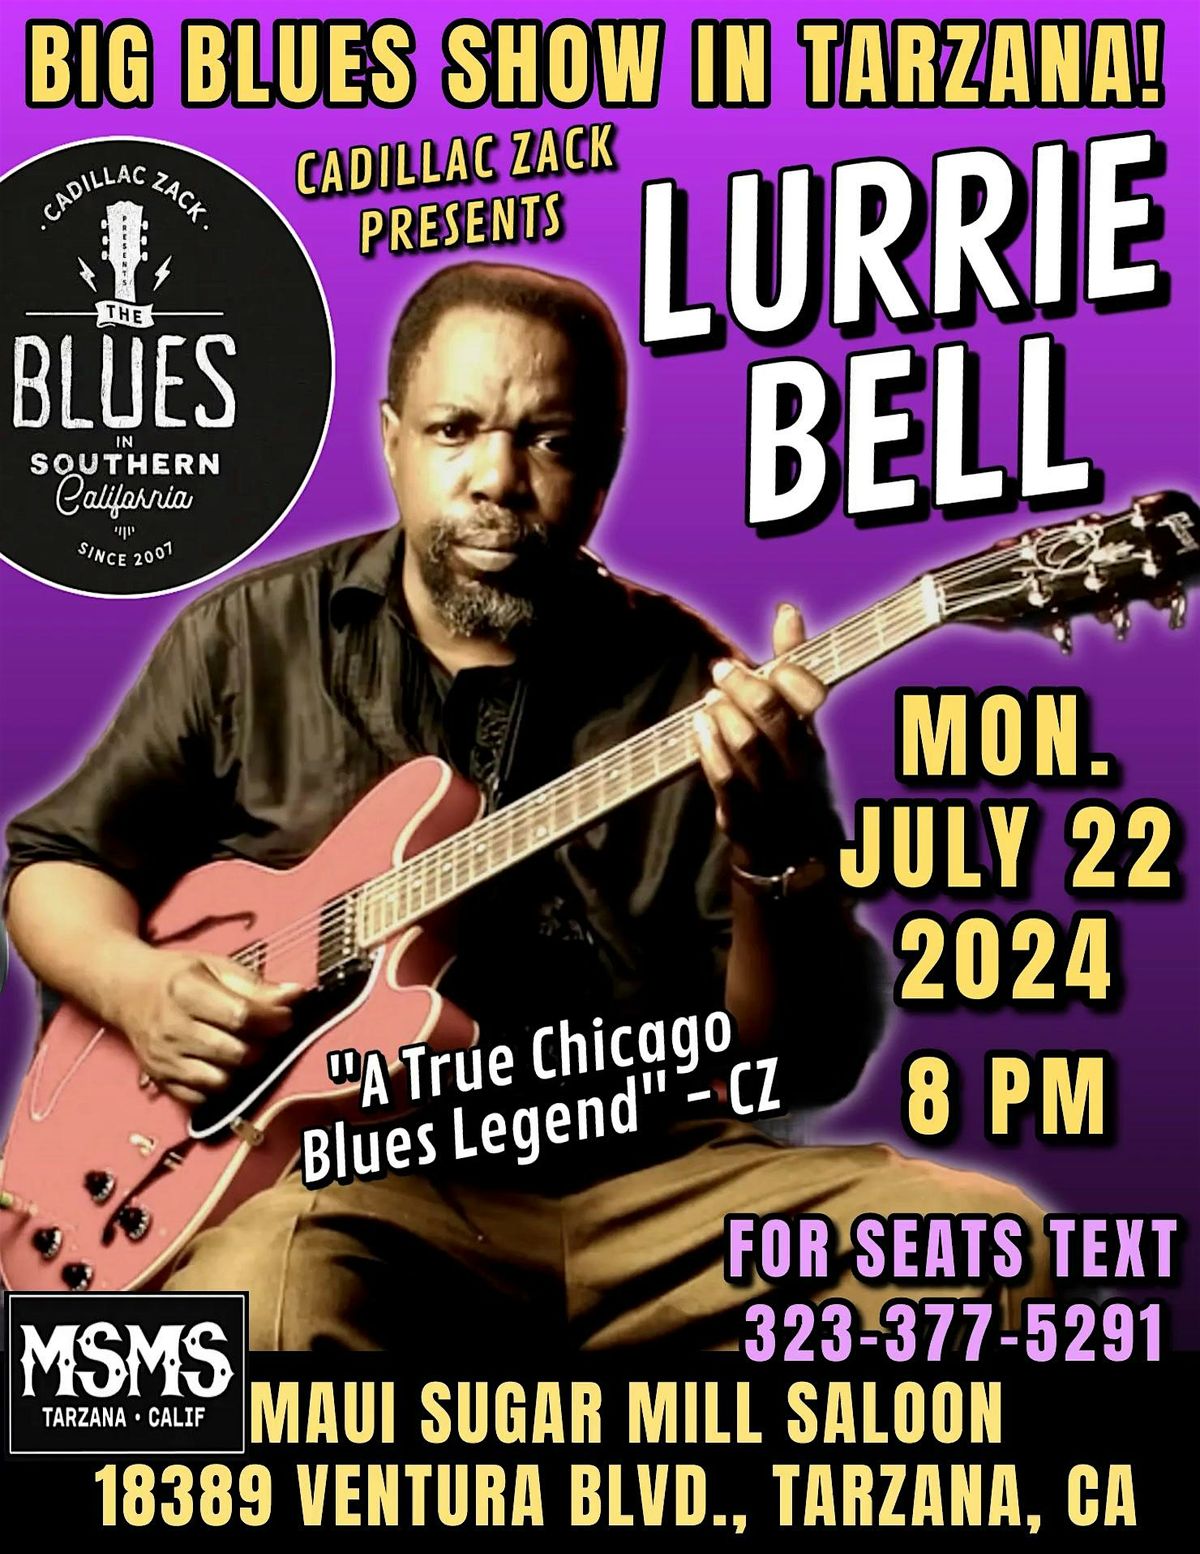 LURRIE BELL - Chicago Blues Guitar Legend - in Tarzana!